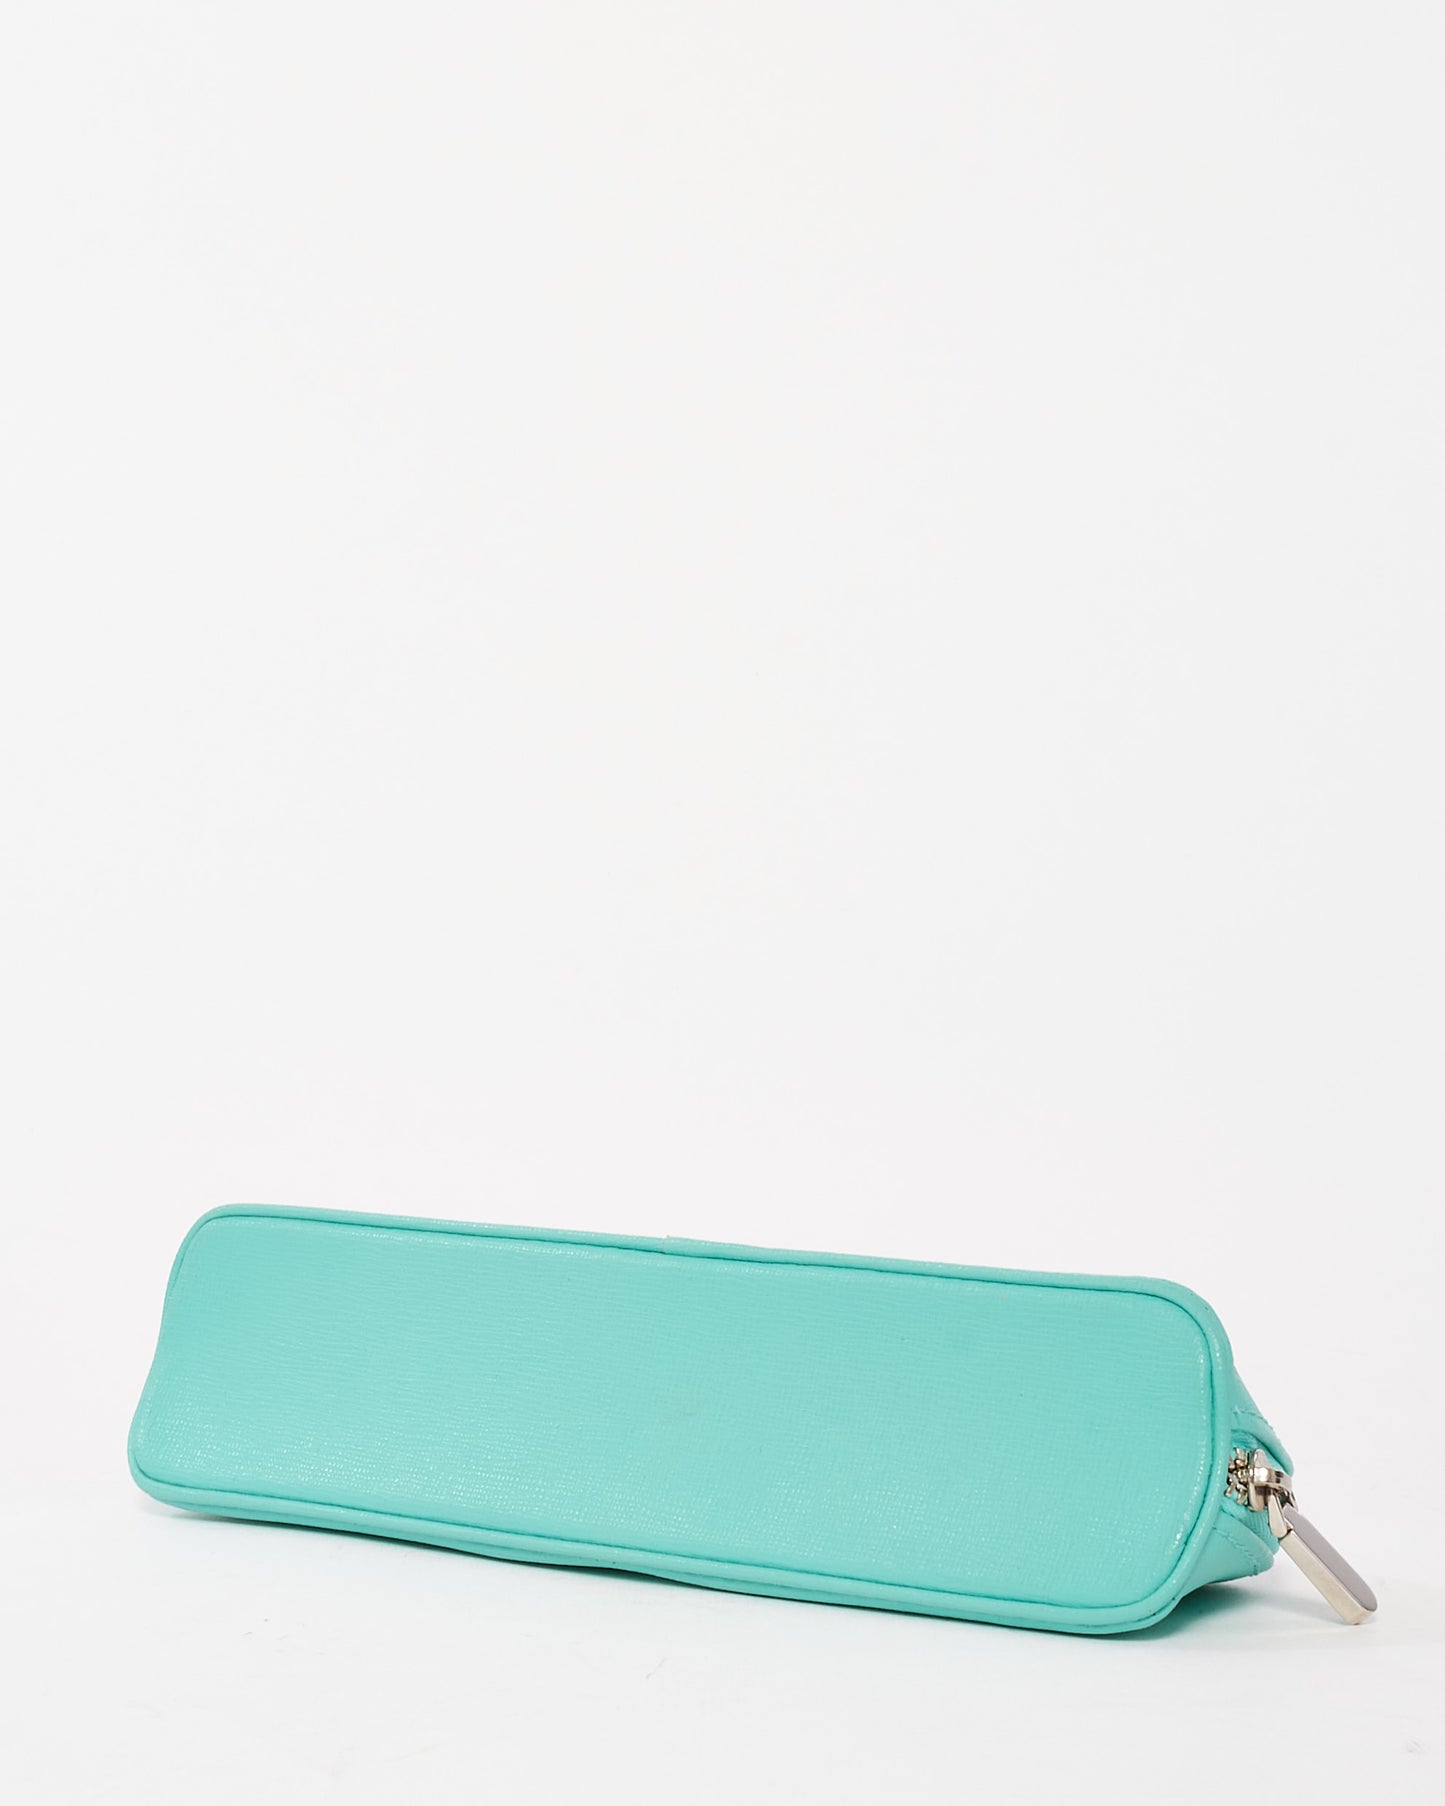 Tiffany & Co. Classic Tiffany Blue Leather Small Pencil Case